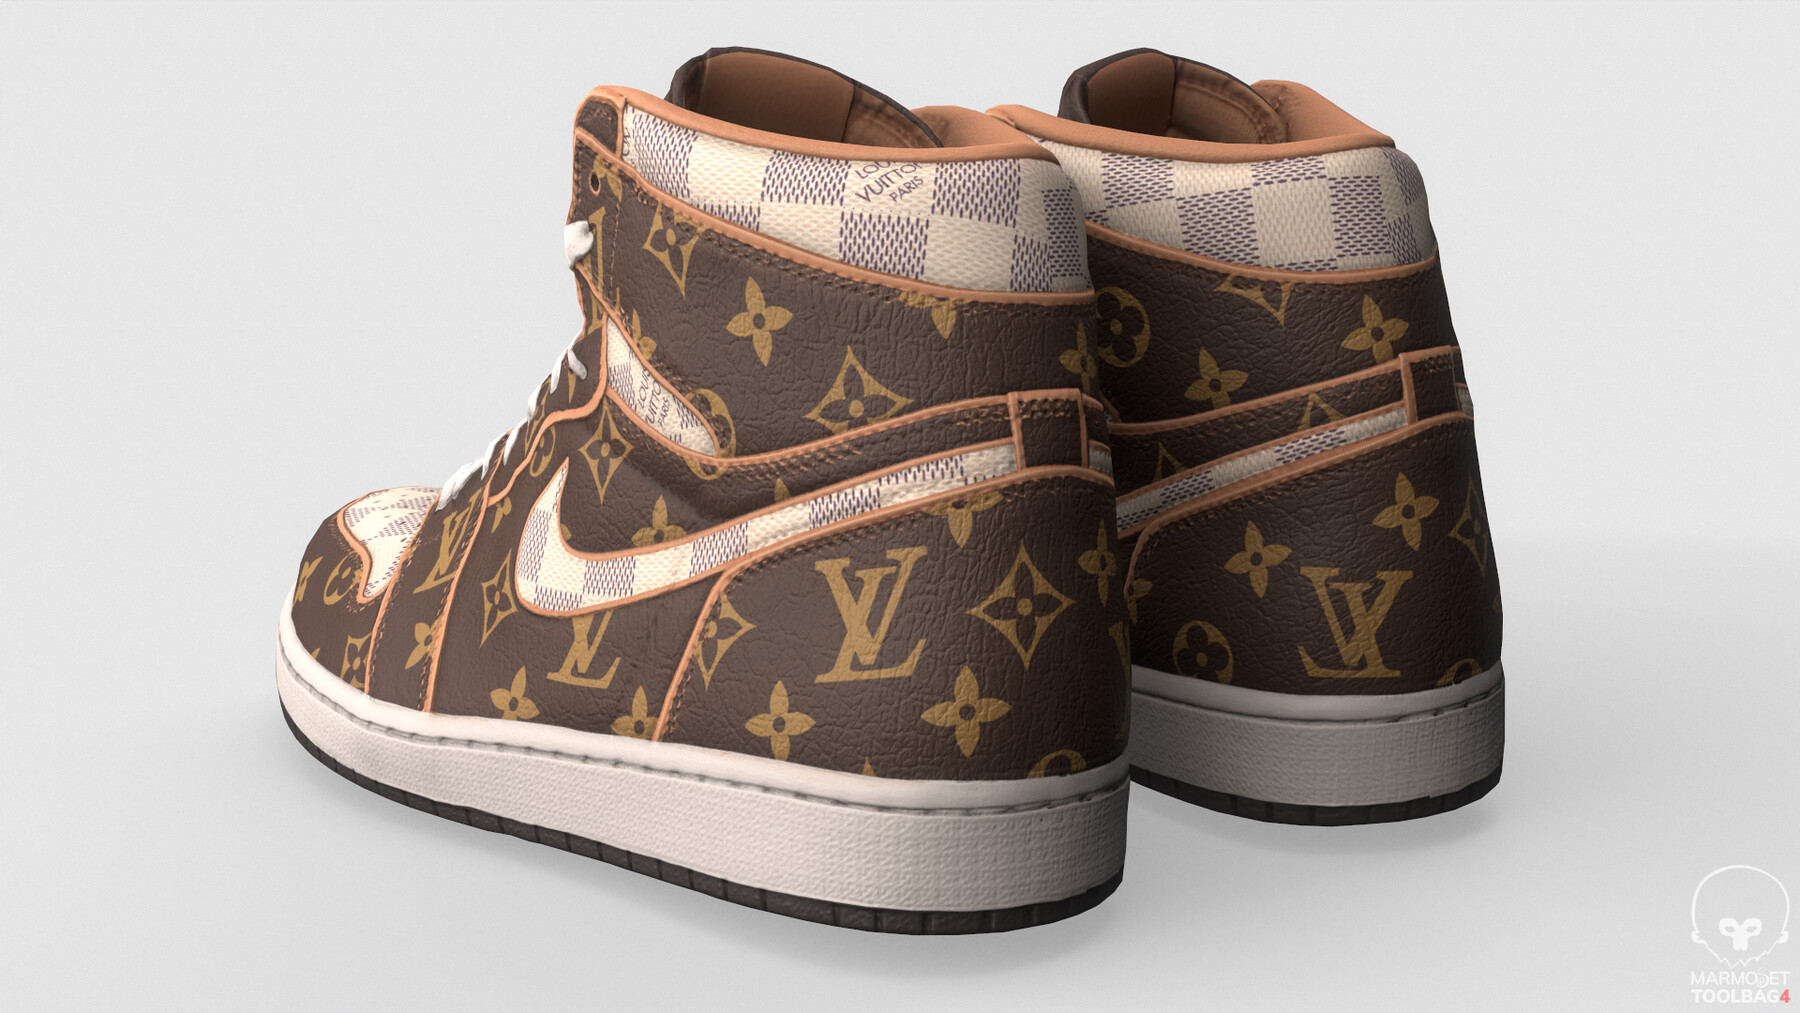 Lifestyle of Mr.X — Nike Air Jordans x Louis Vuitton collab